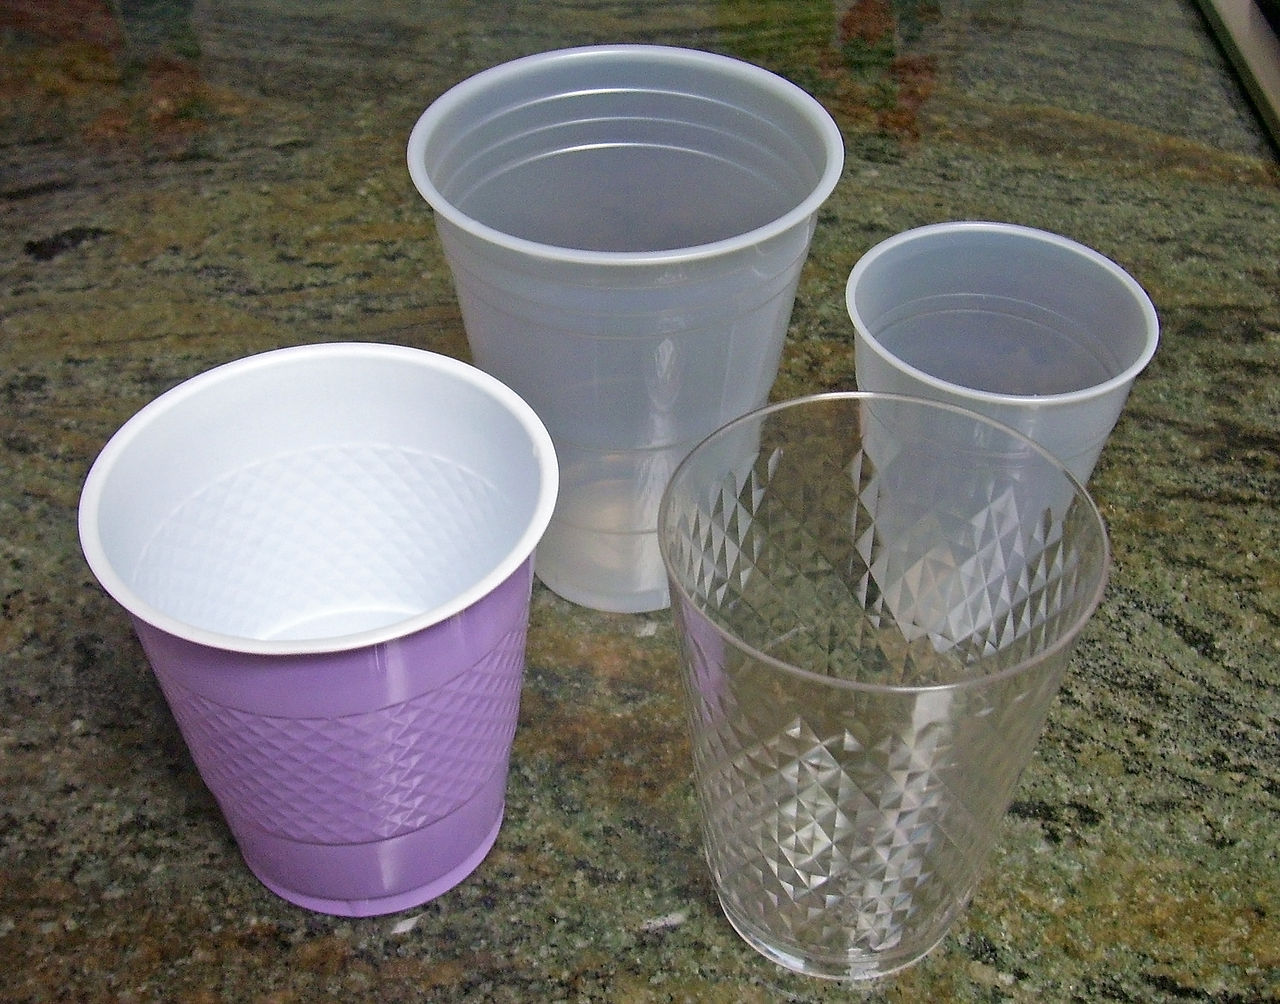 https://upload.wikimedia.org/wikipedia/commons/thumb/a/a7/Plastic_cups.jpg/1280px-Plastic_cups.jpg